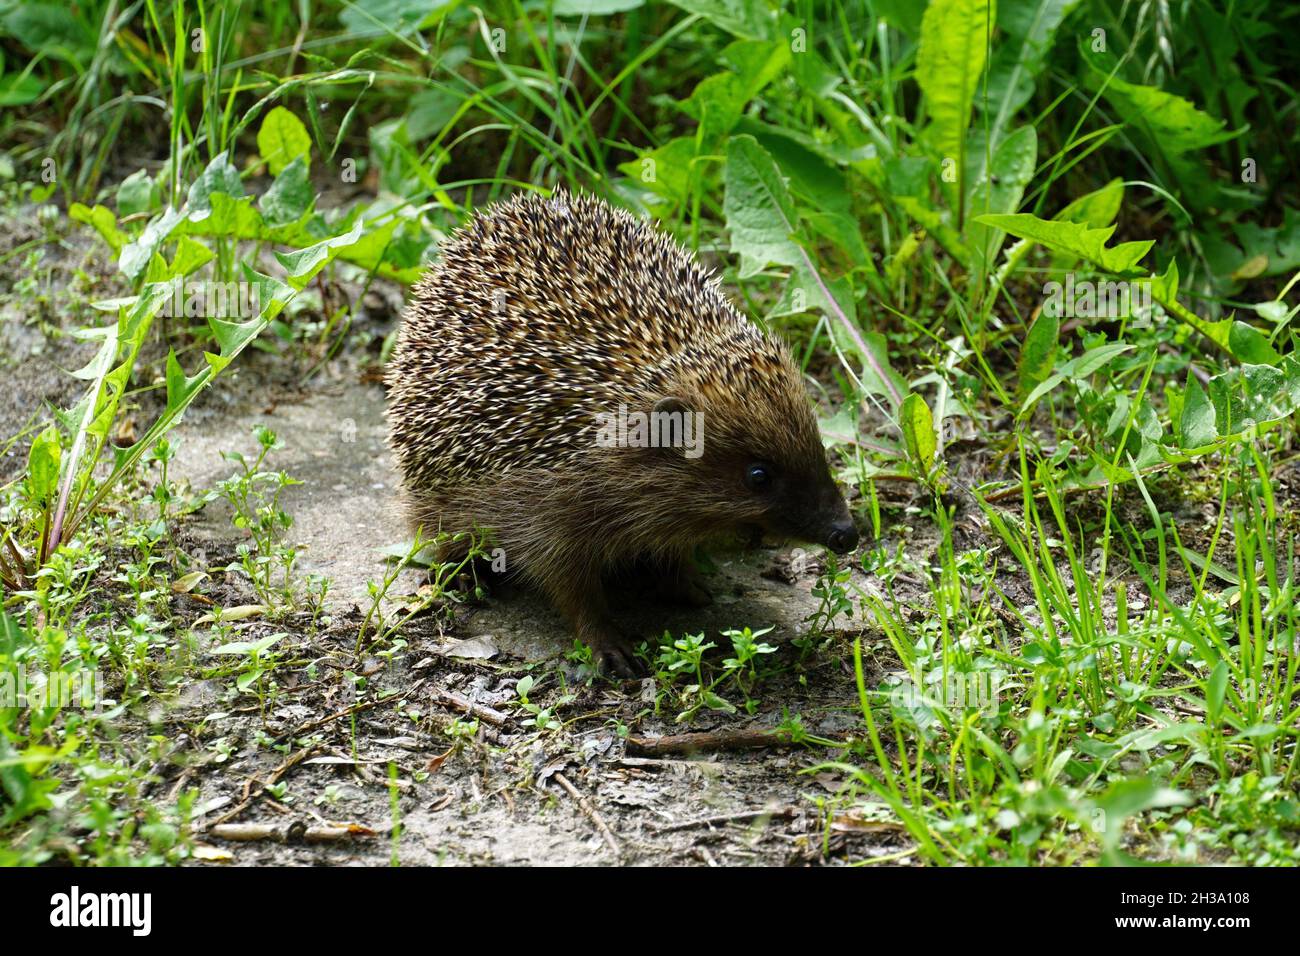 Hedgehog in its natural habitat. Wildlife photography Stock Photo